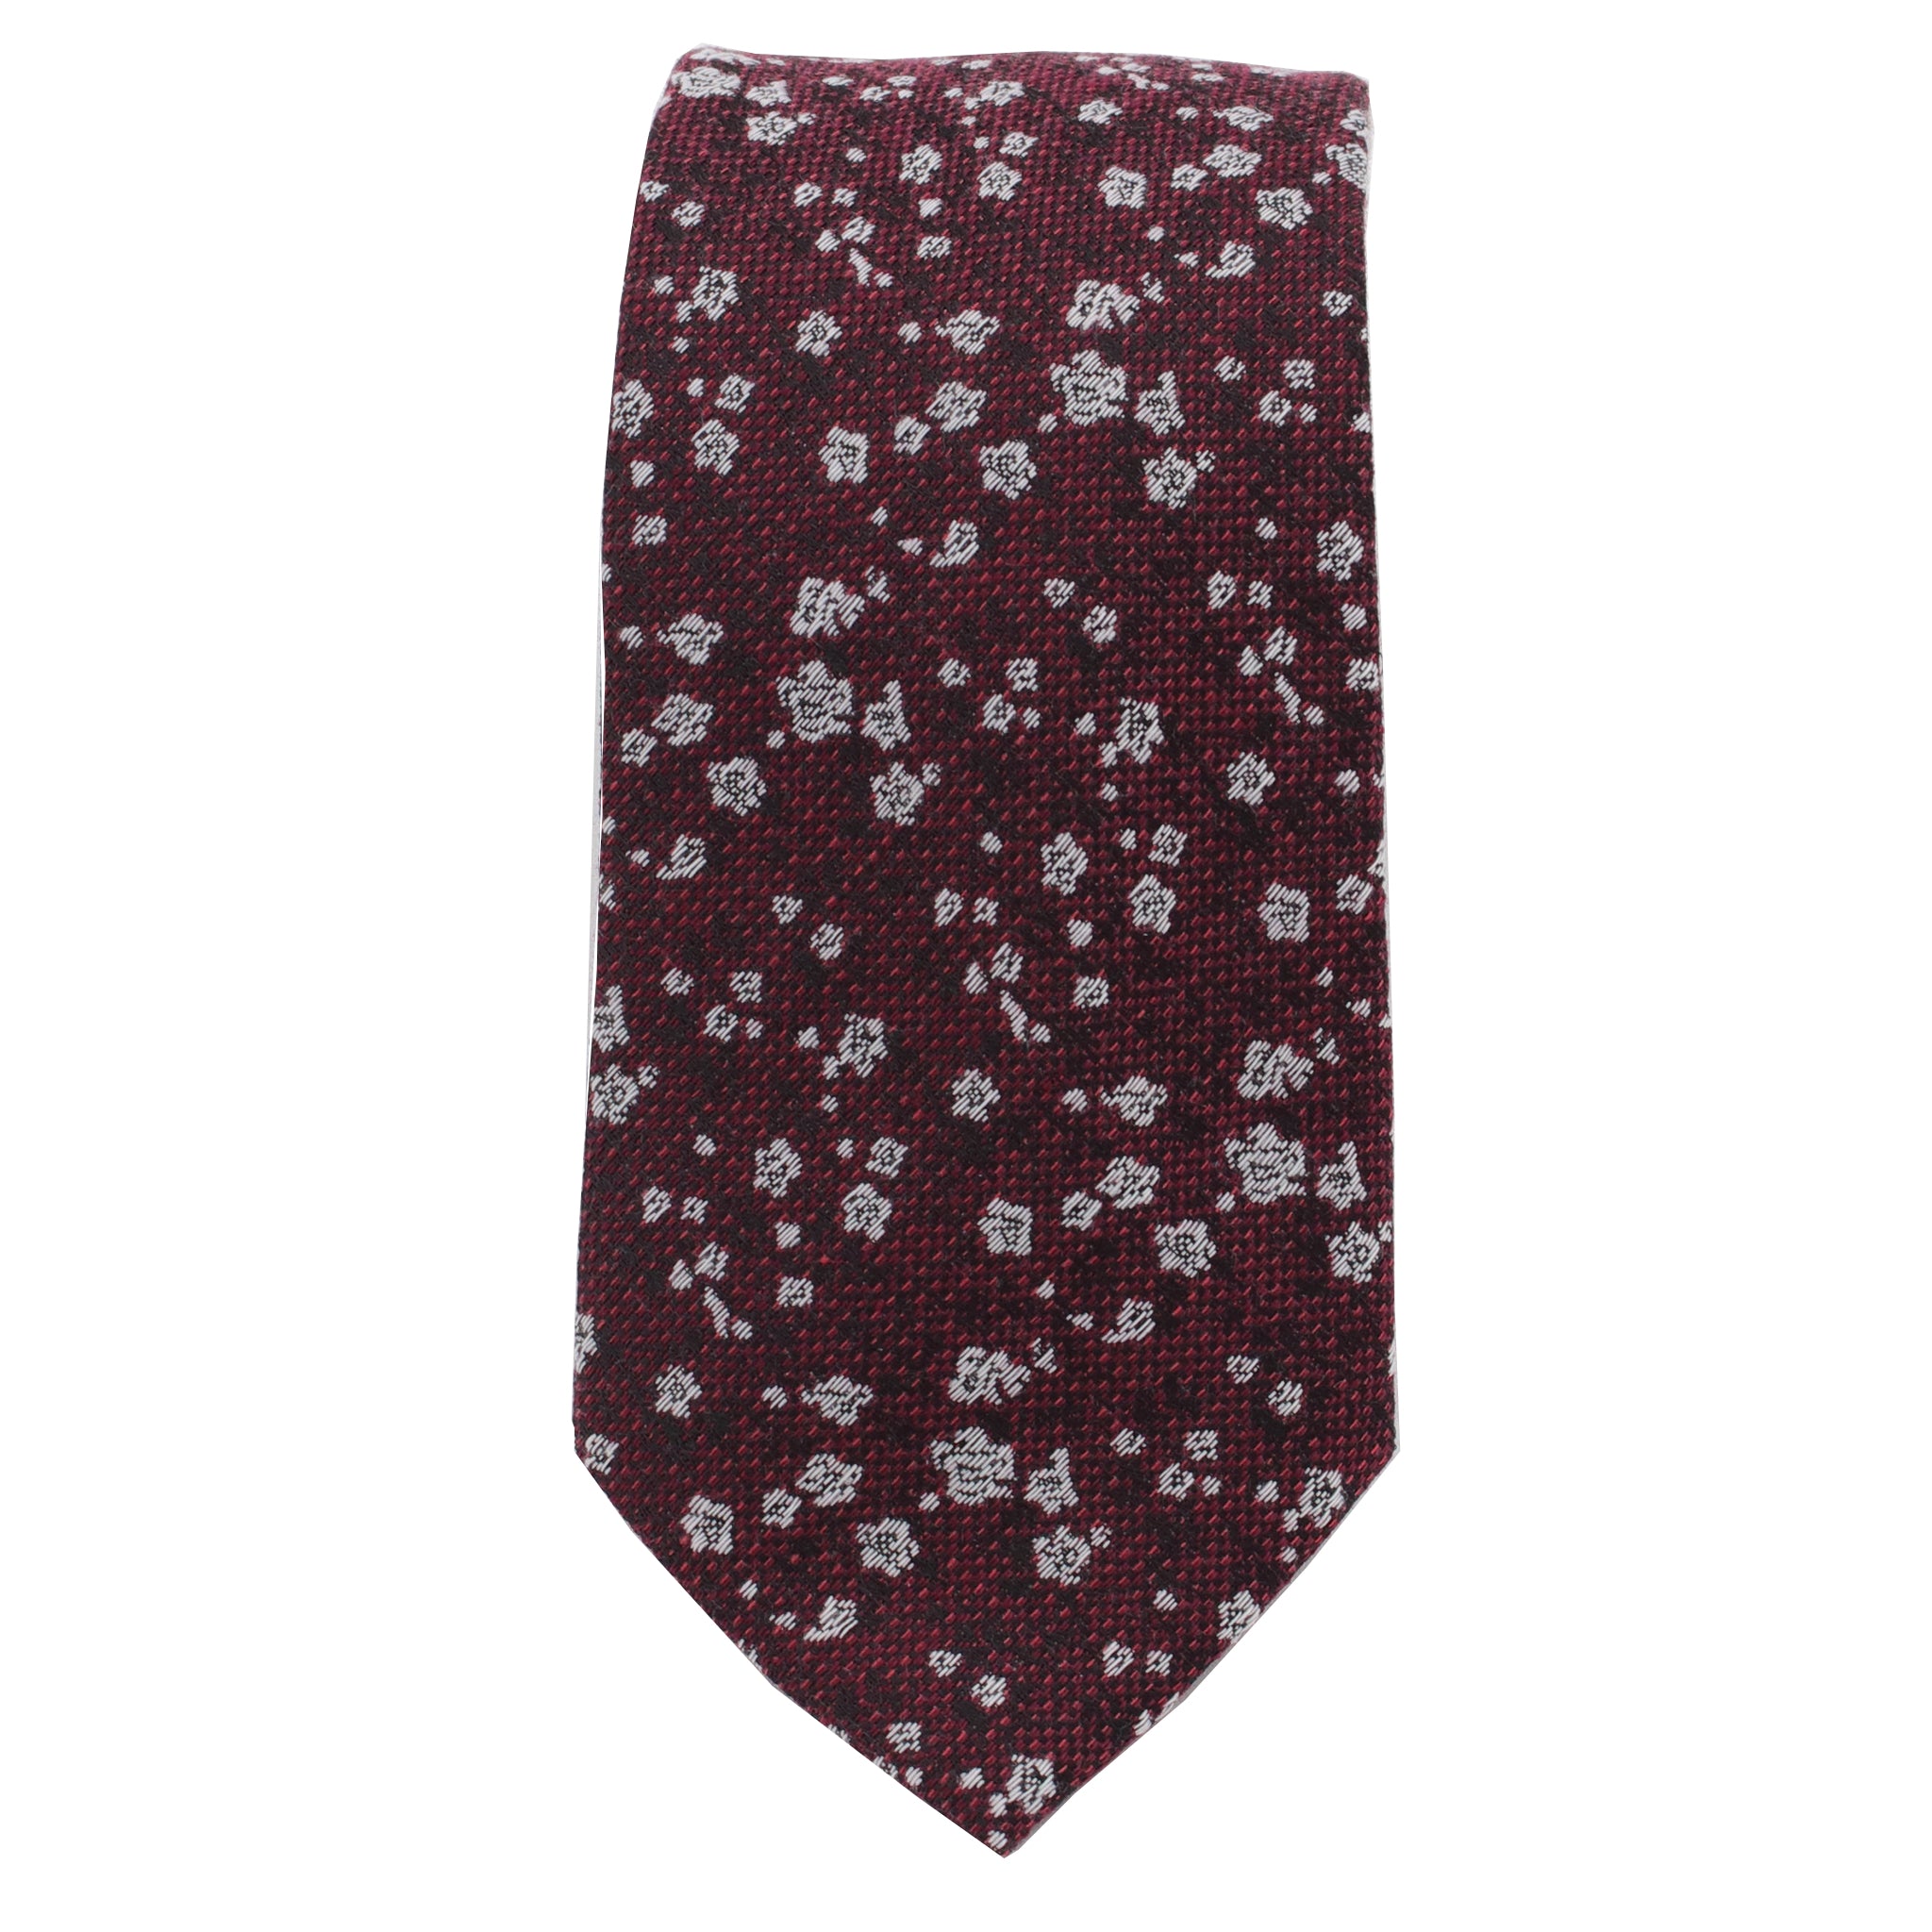 Burgundy & Silver Floral Tie